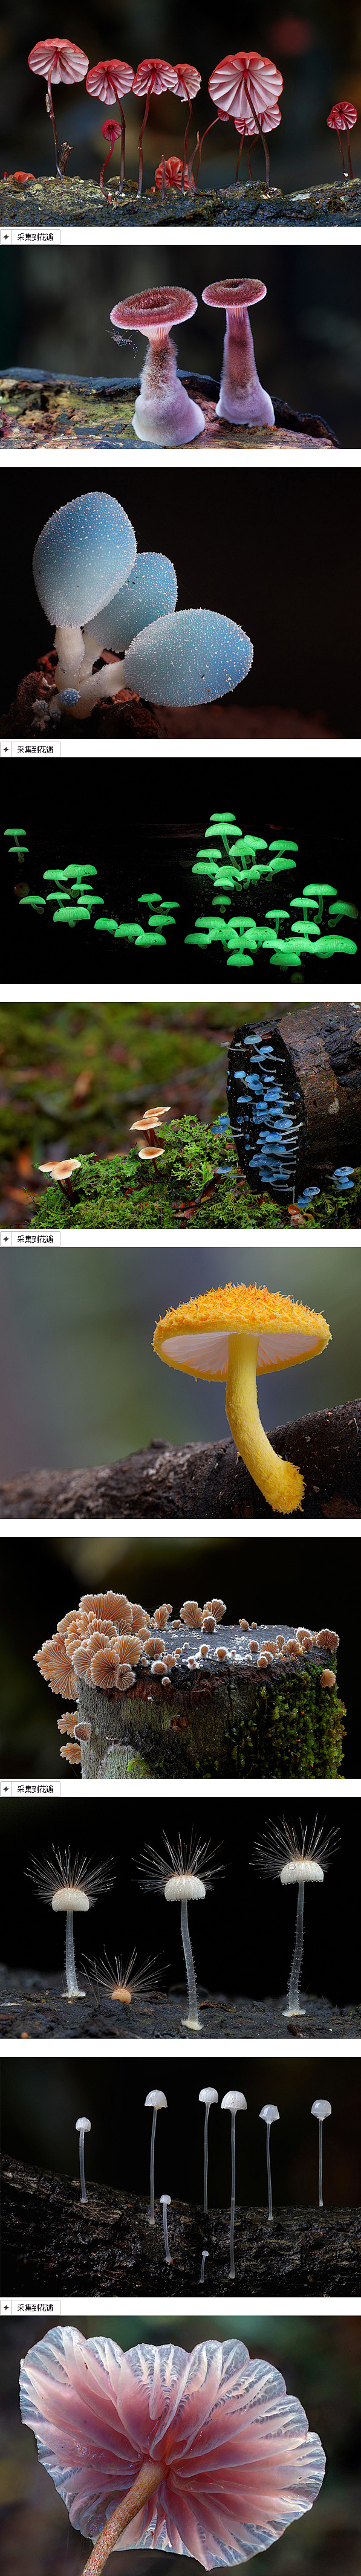 Steve Axford摄影作品：蘑菇 ...